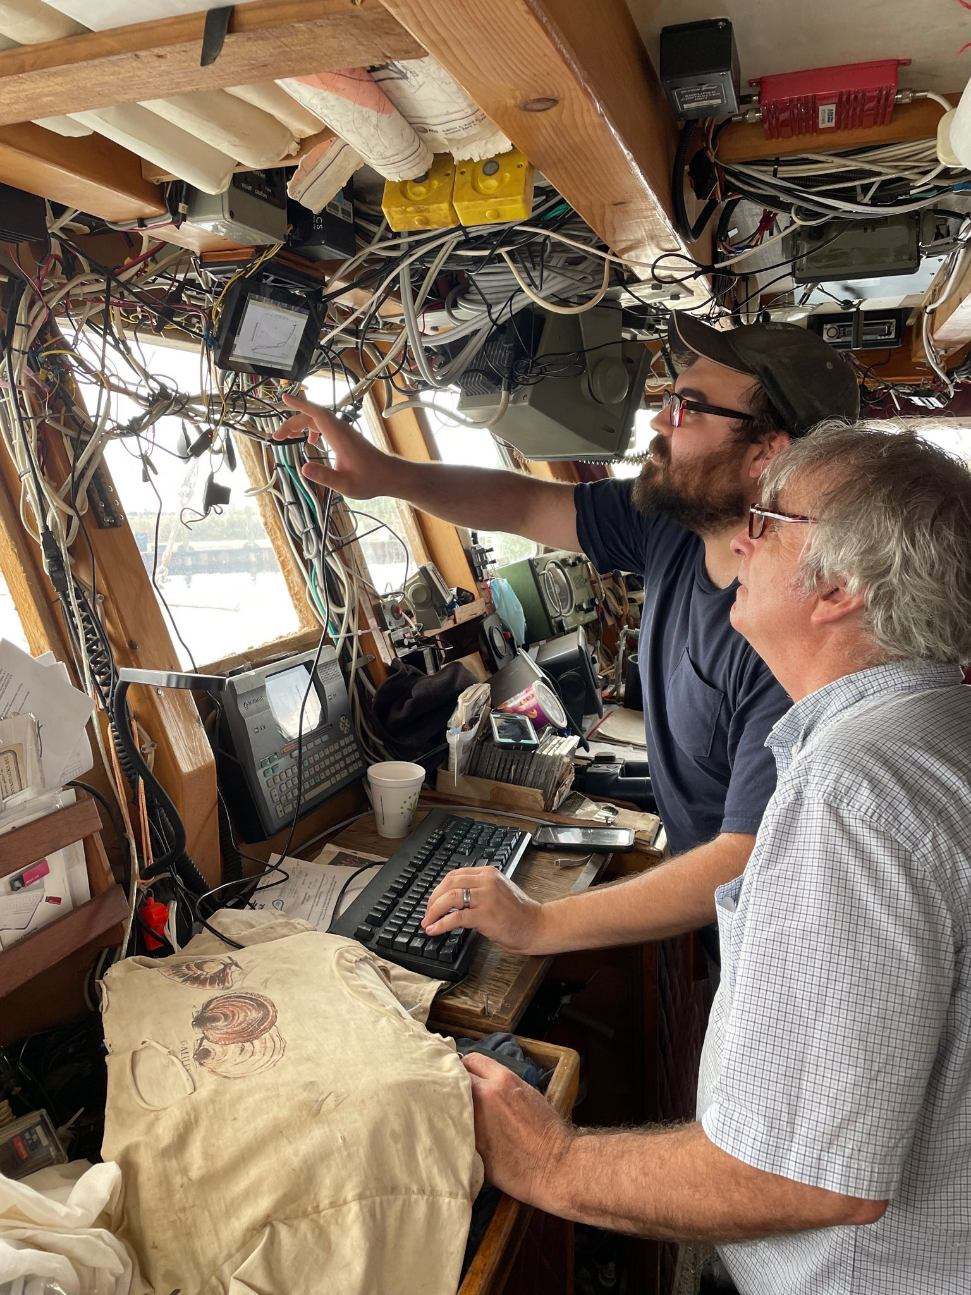 Manning and Maynard push fishermen science forward